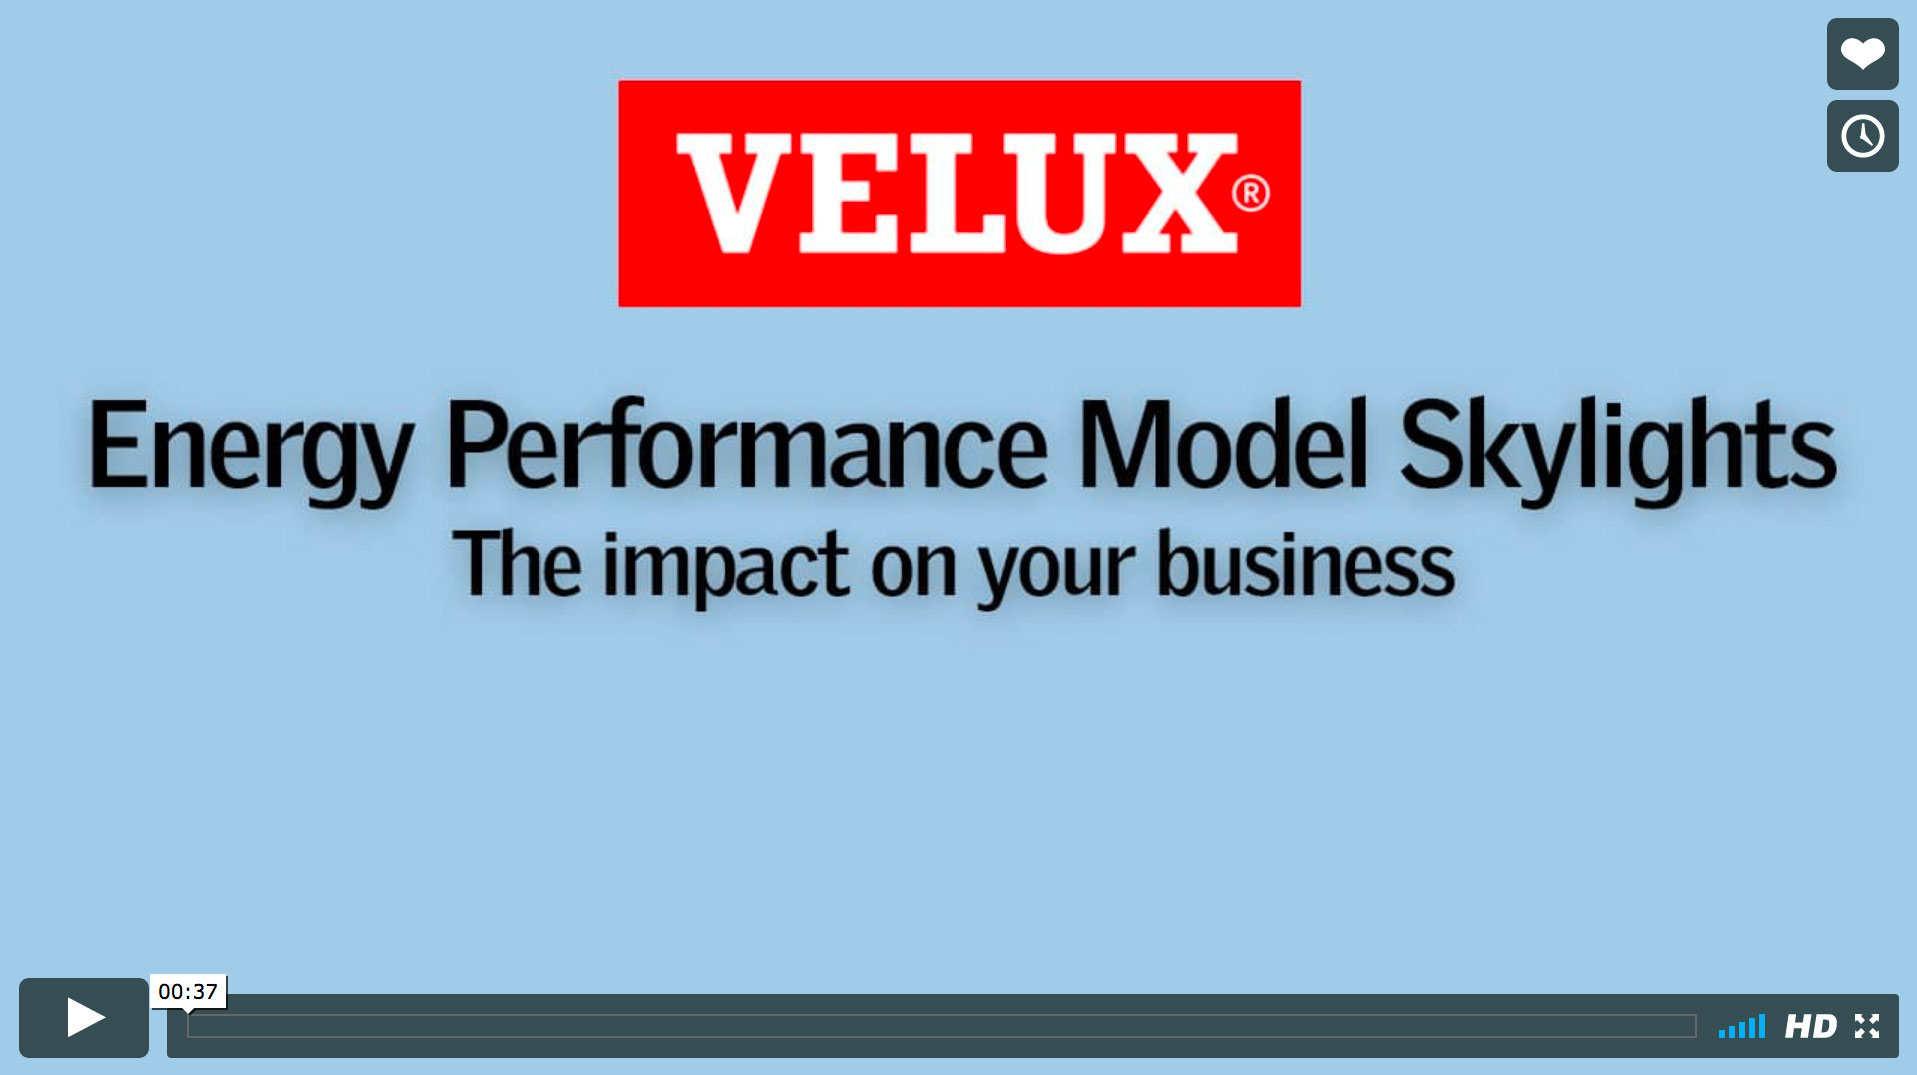 VELUX Energy Performance Model Business Benefits Video